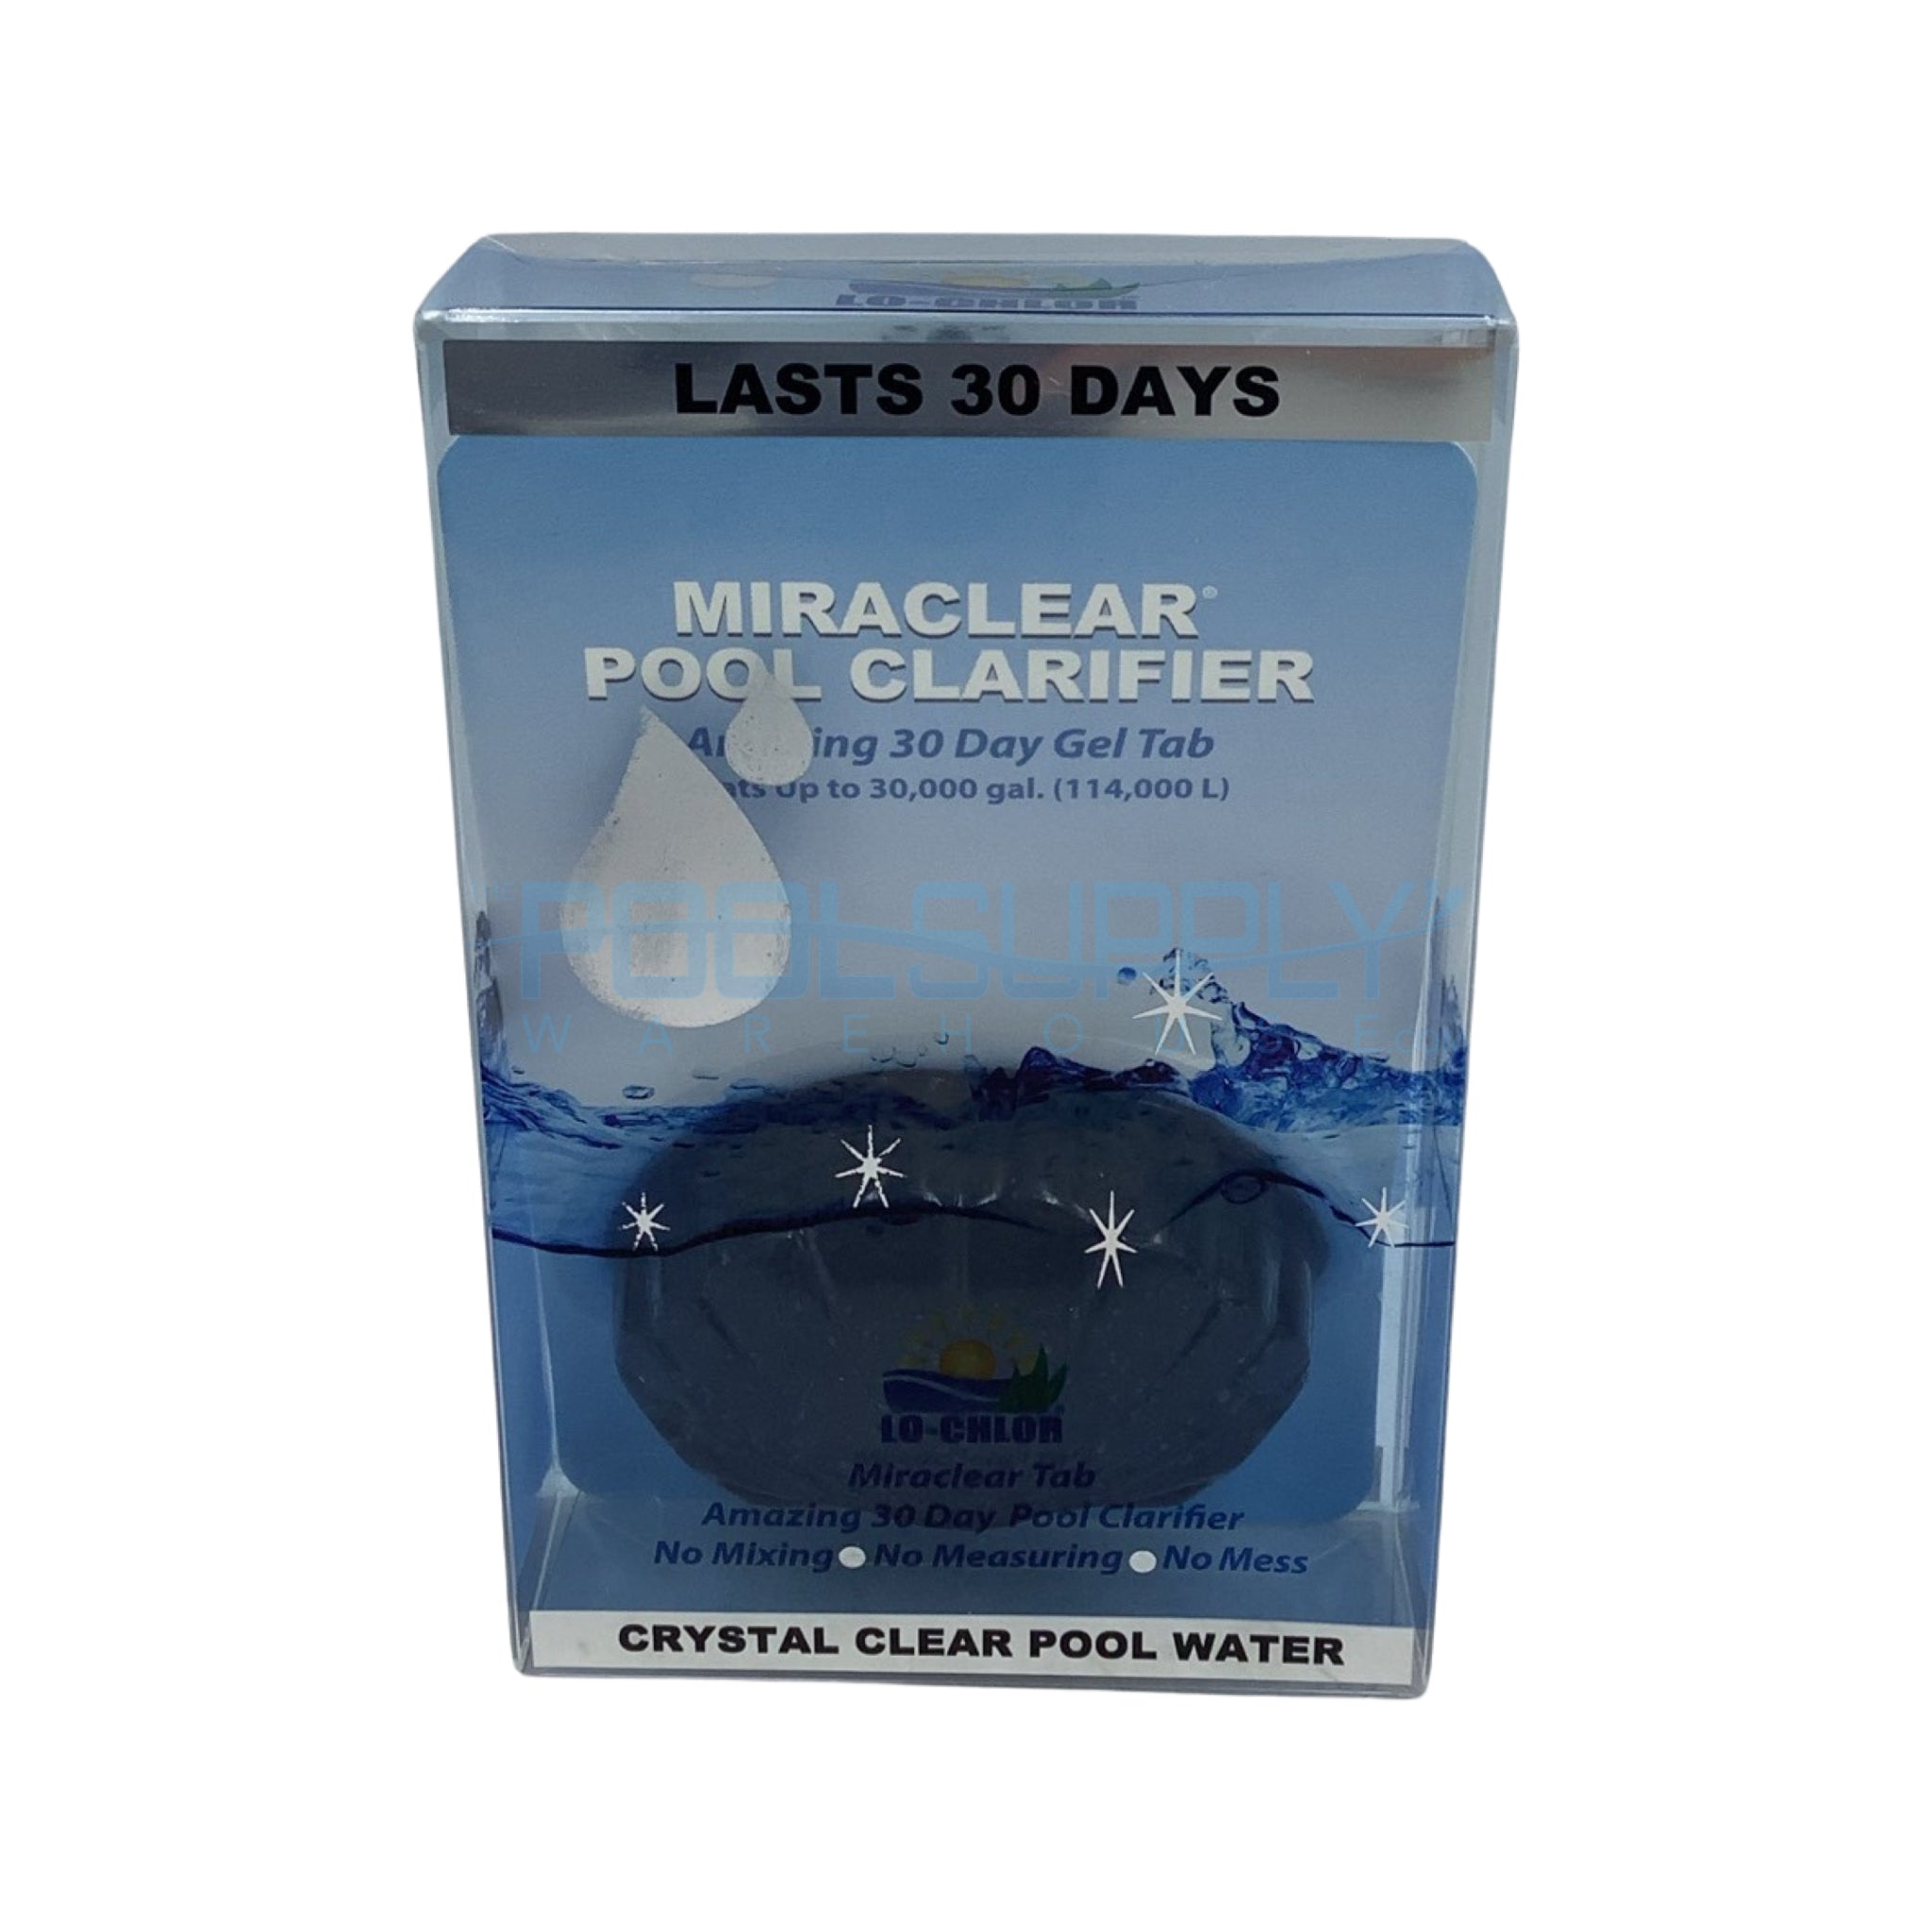 Miraclear Pool Clarifier Tab - 2.8 oz. - LO-3030 - The Pool Supply Warehouse